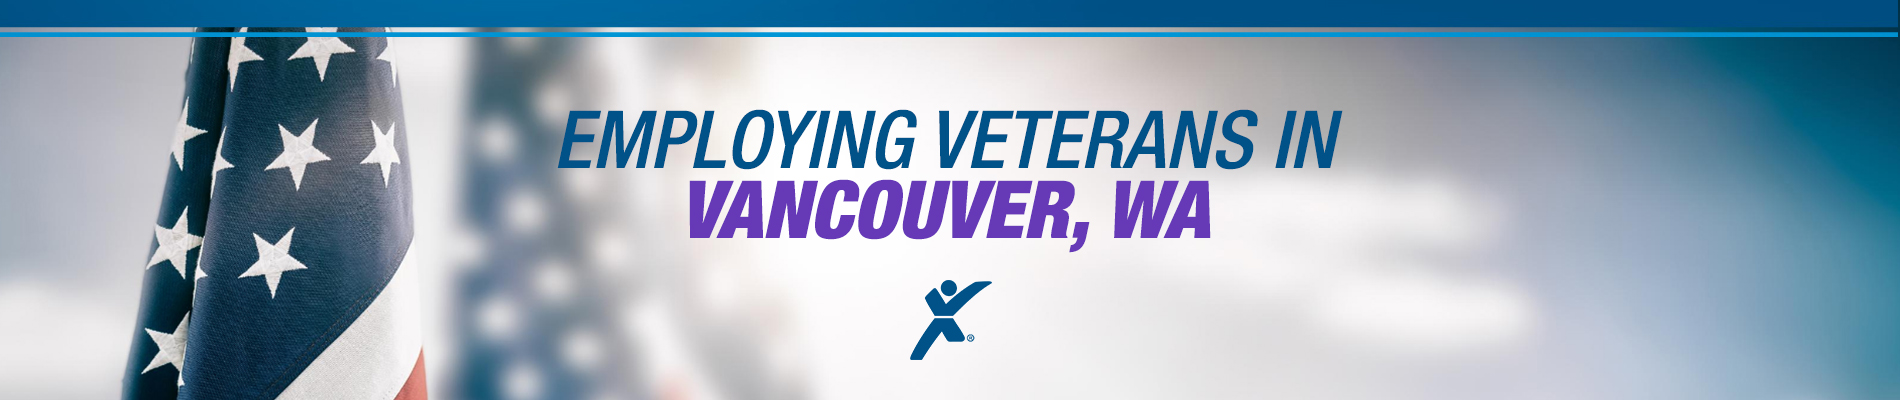 Express is Hiring Veterans in Vancouver Washington